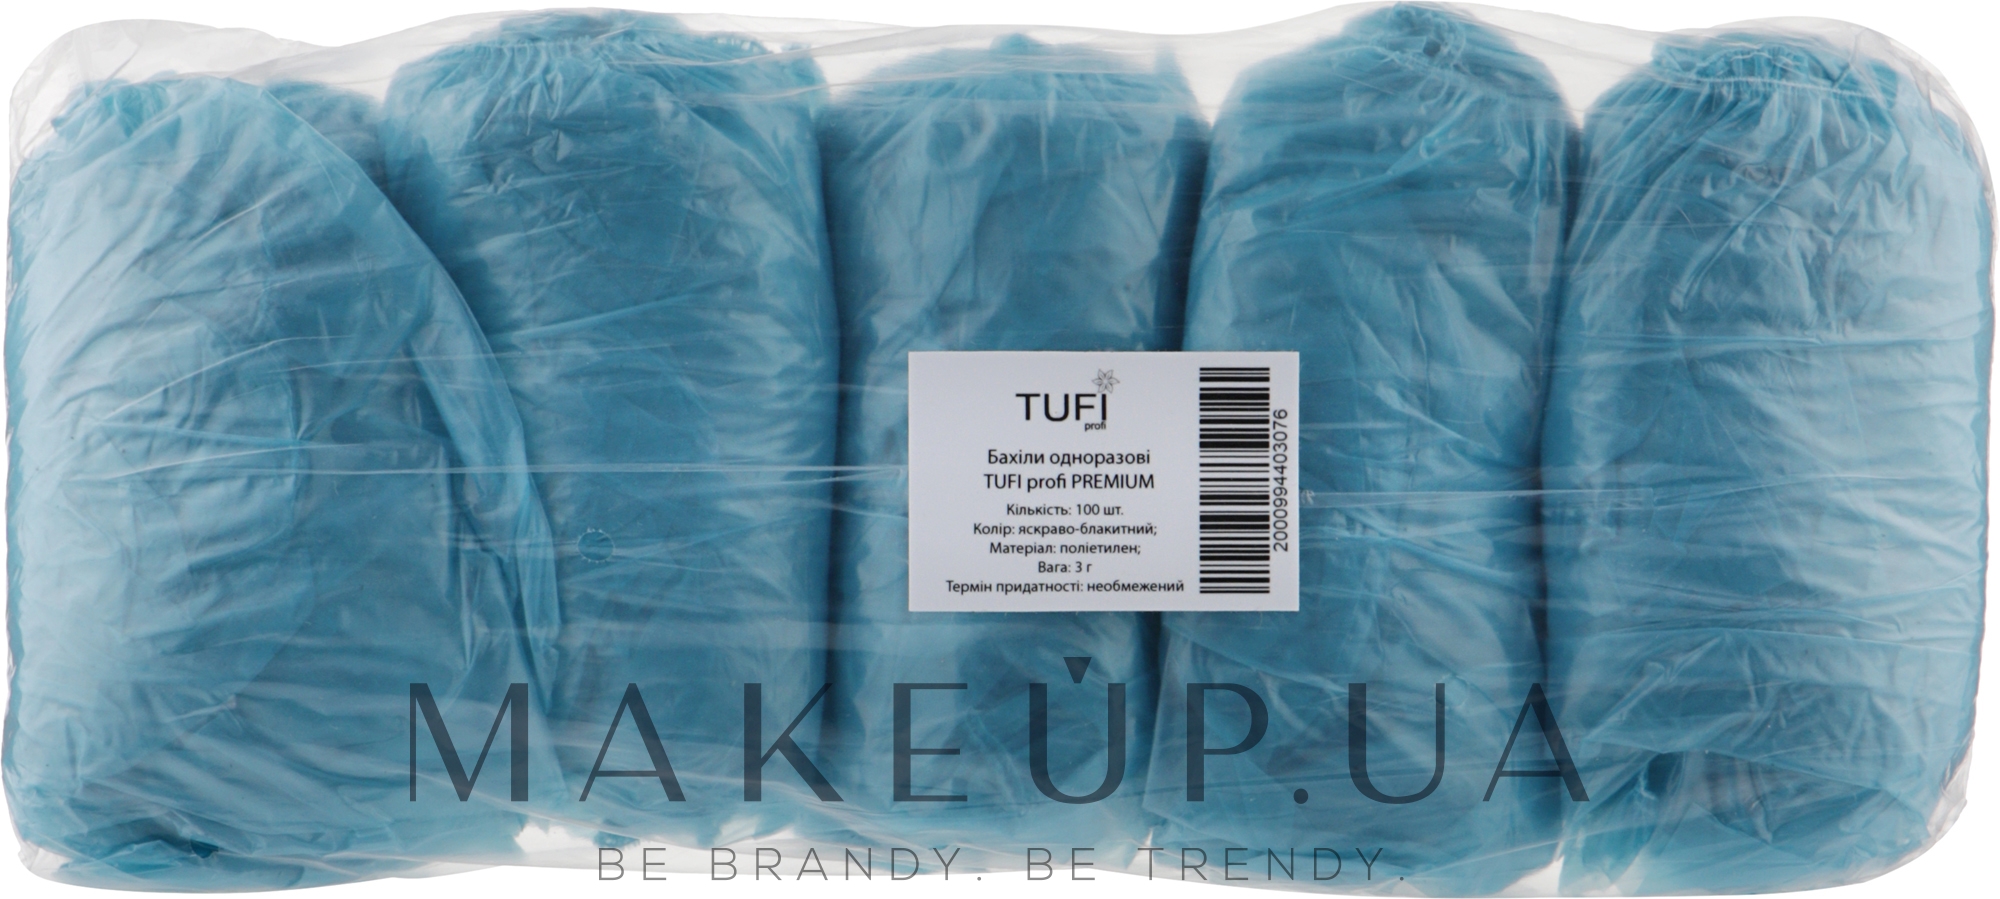 Бахилы одноразовые, 3 г ярко-голубой, 100 шт - Tuffi Proffi Premium — фото 100шт